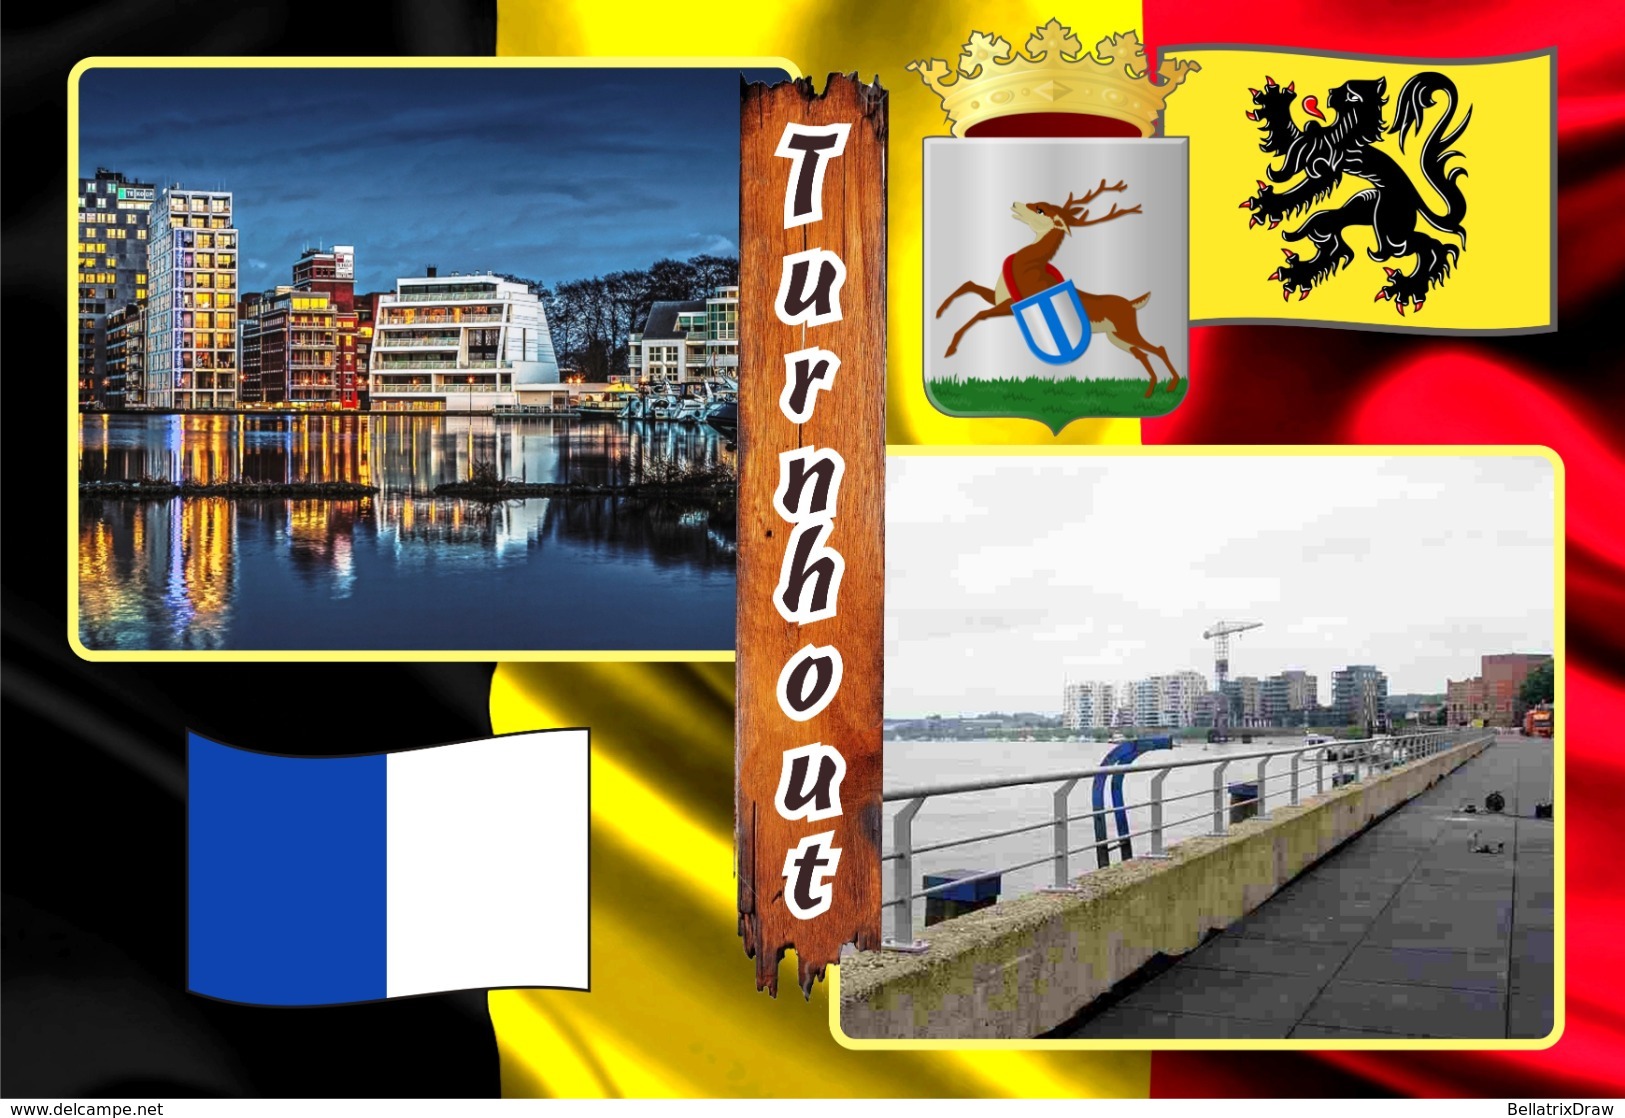 Postcards, REPRODUCTION, Municipalities of Belgium, Turnhout, duplex XIII (597-649) - 53 pcs.